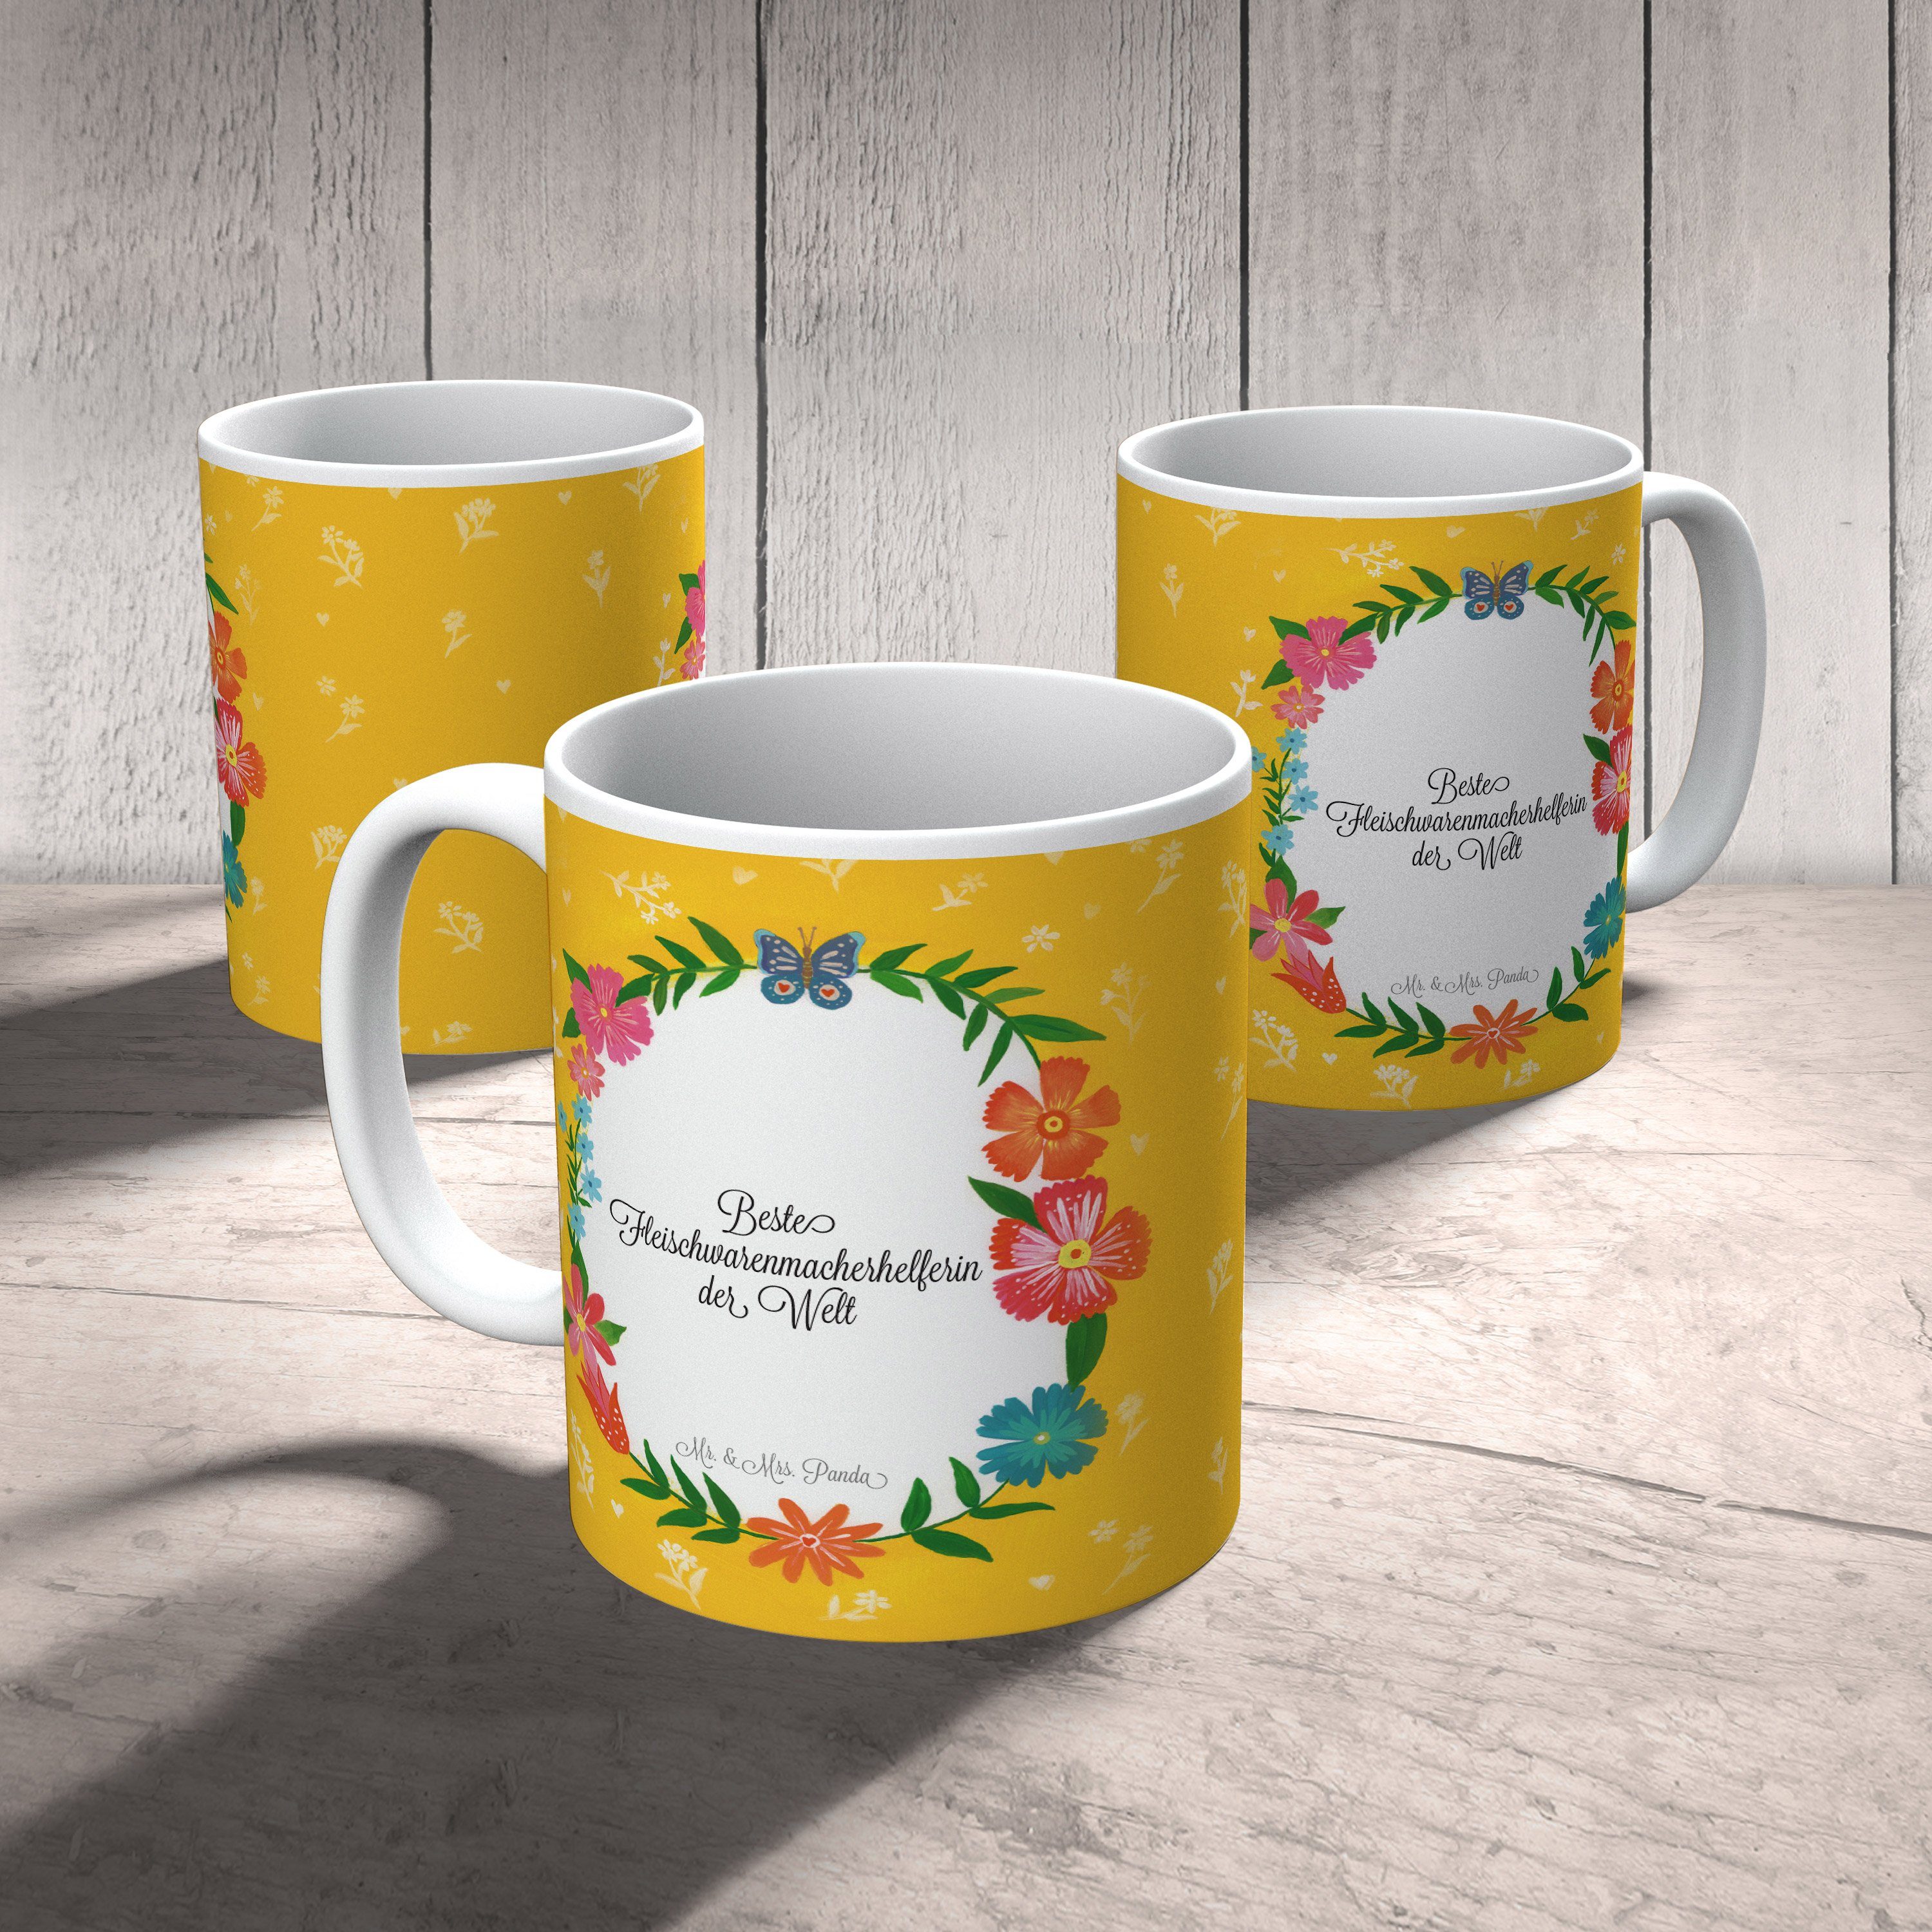 Mr. & Mrs. Panda Tasse Keramik Geschenk, Bachelor, Kaffeebecher, Rente, Fleischwarenmacherhelferin 